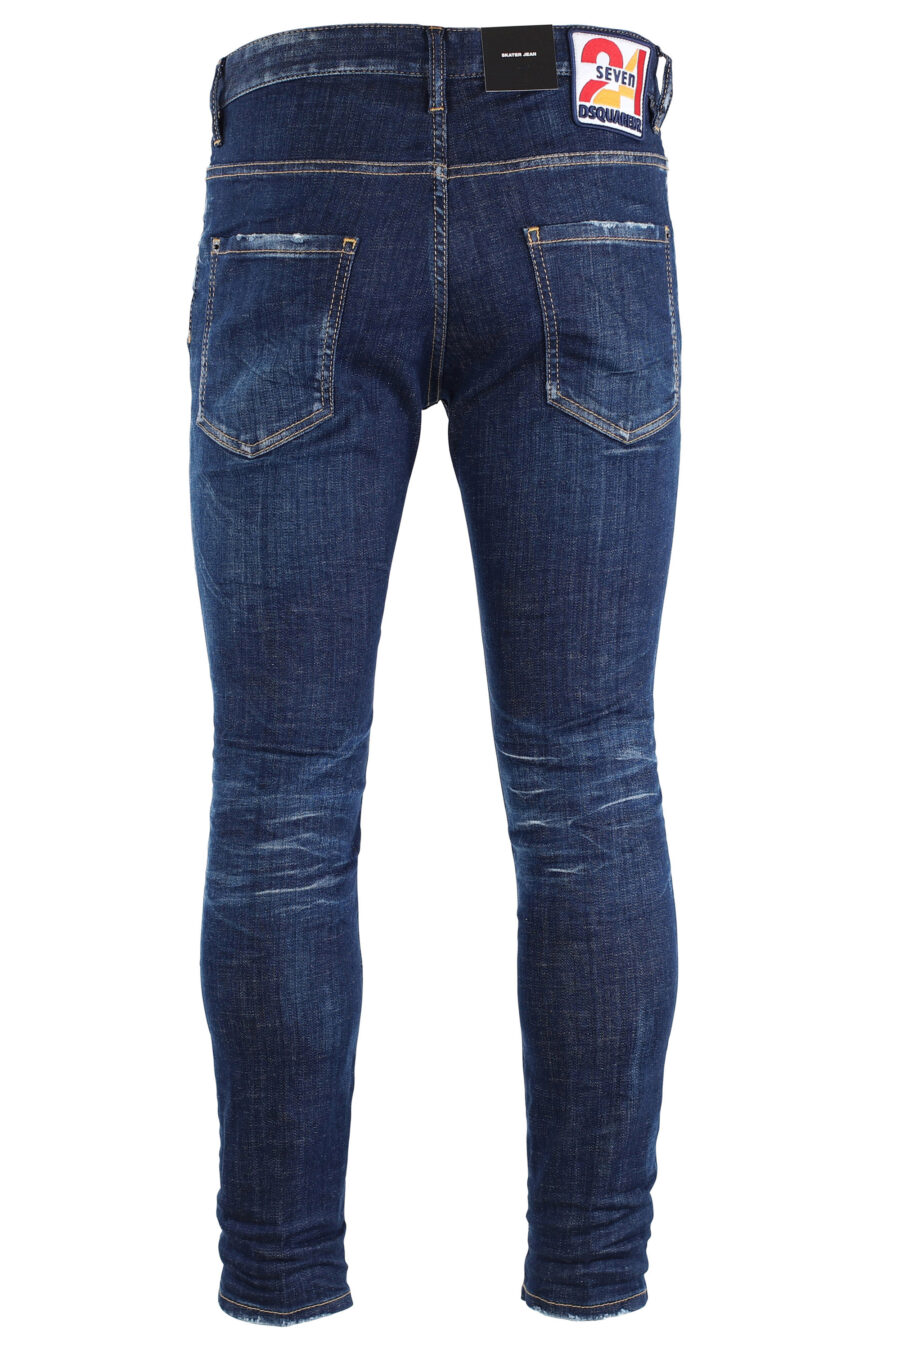 Denim trousers "24 seven skater jean" blue semi-worn - IMG 1618